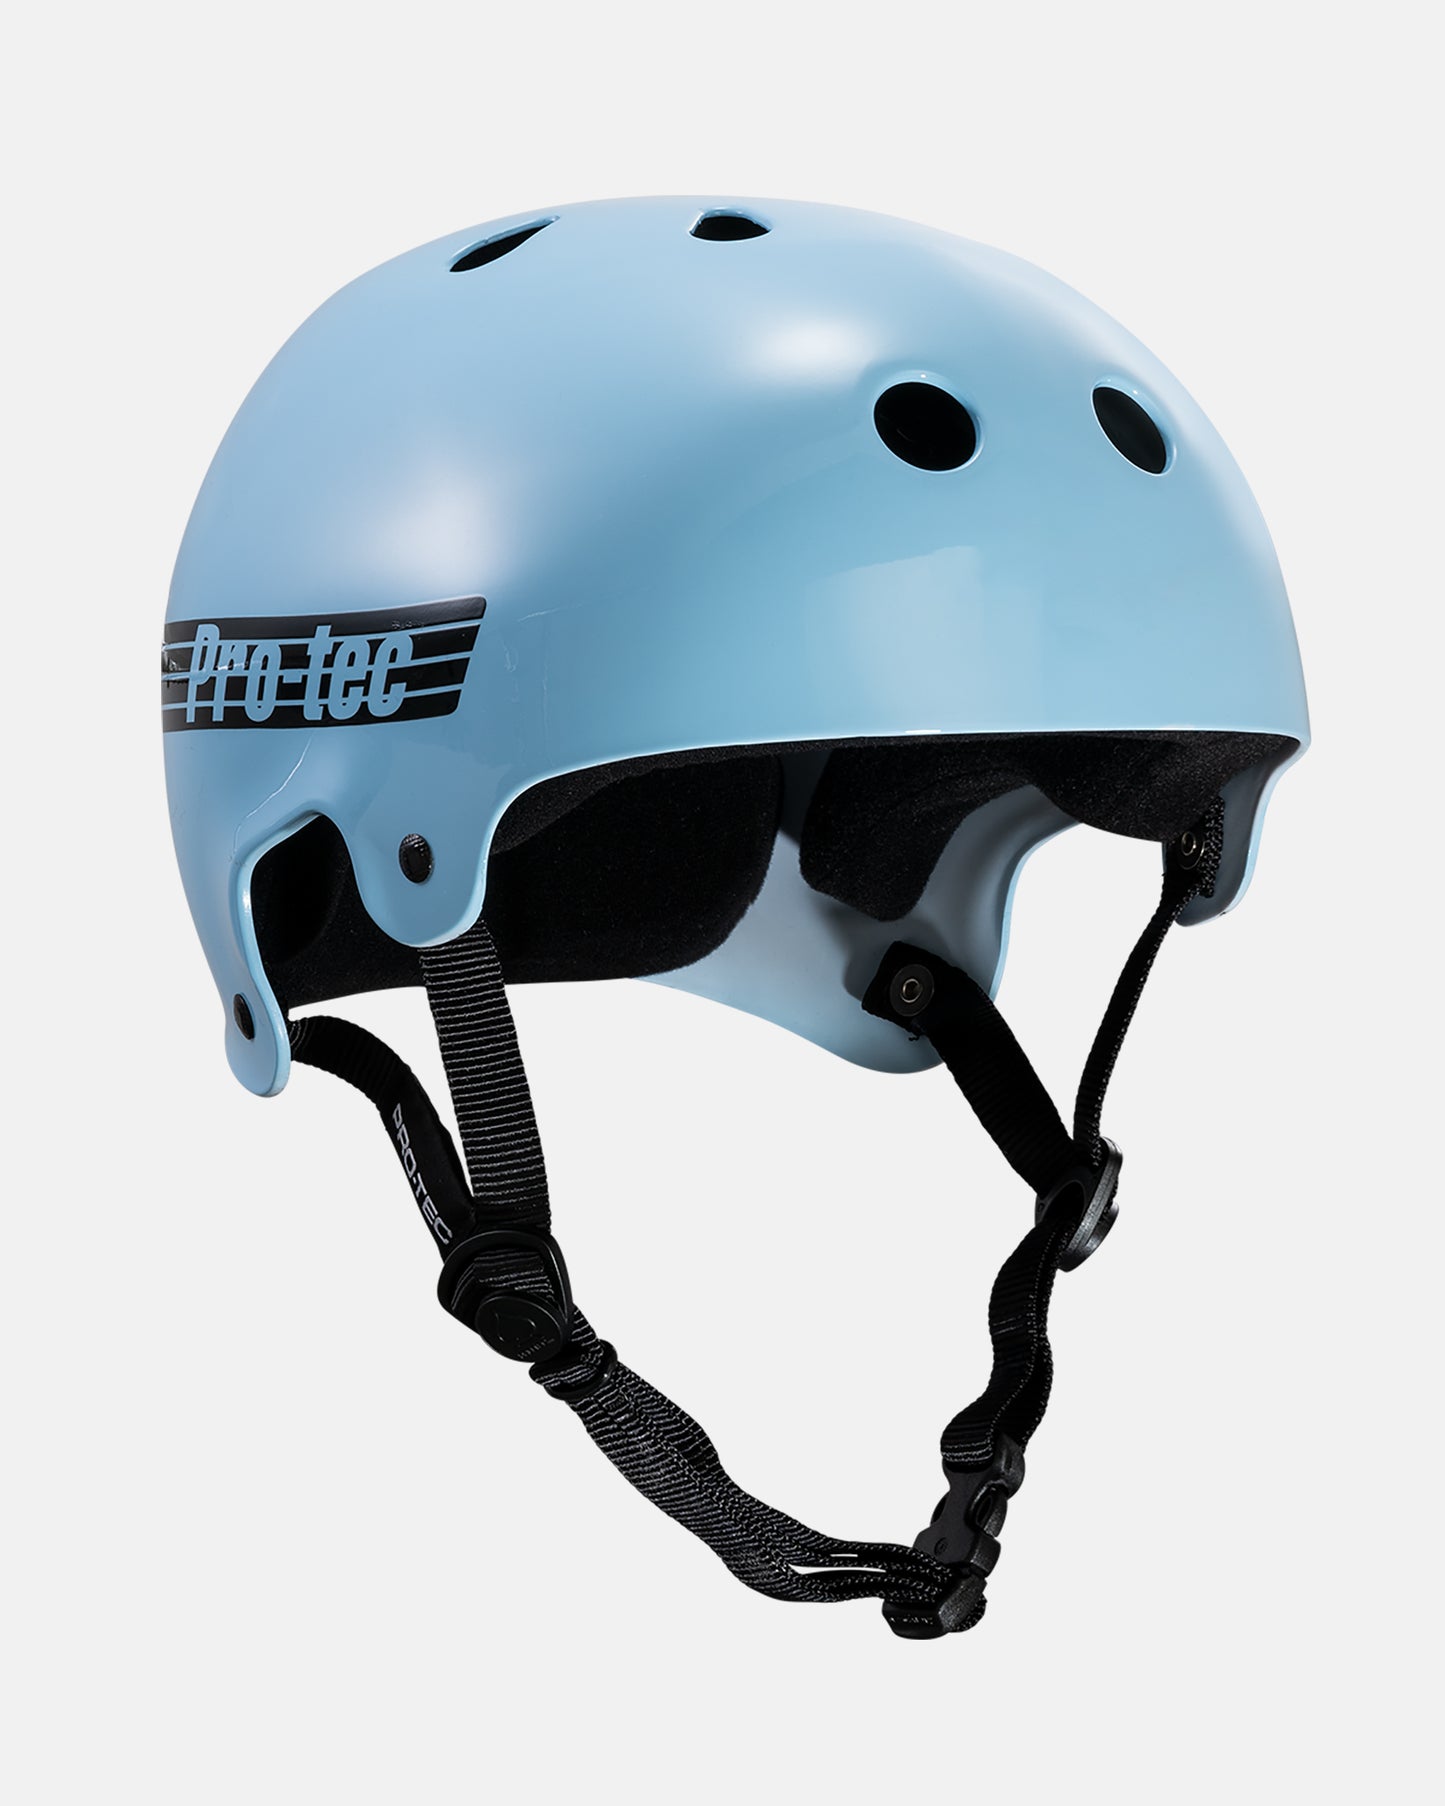 Protec Old School Skate Helmet - Gloss Baby Blue - Impala Rollerskates